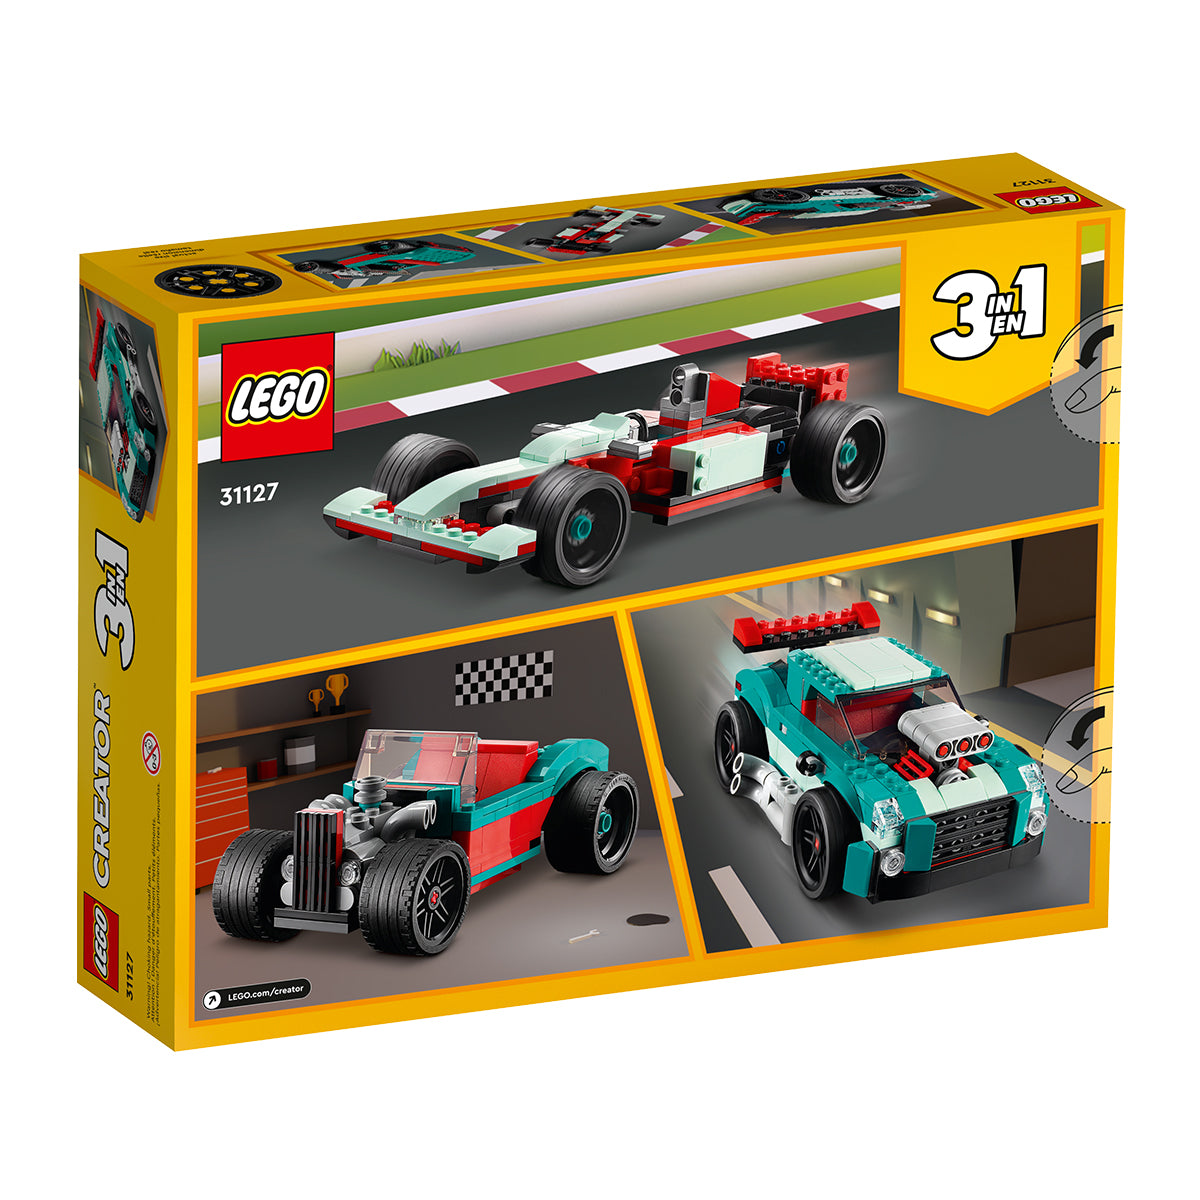 LEGO Creator 3 In 1 - Street Racer 31127